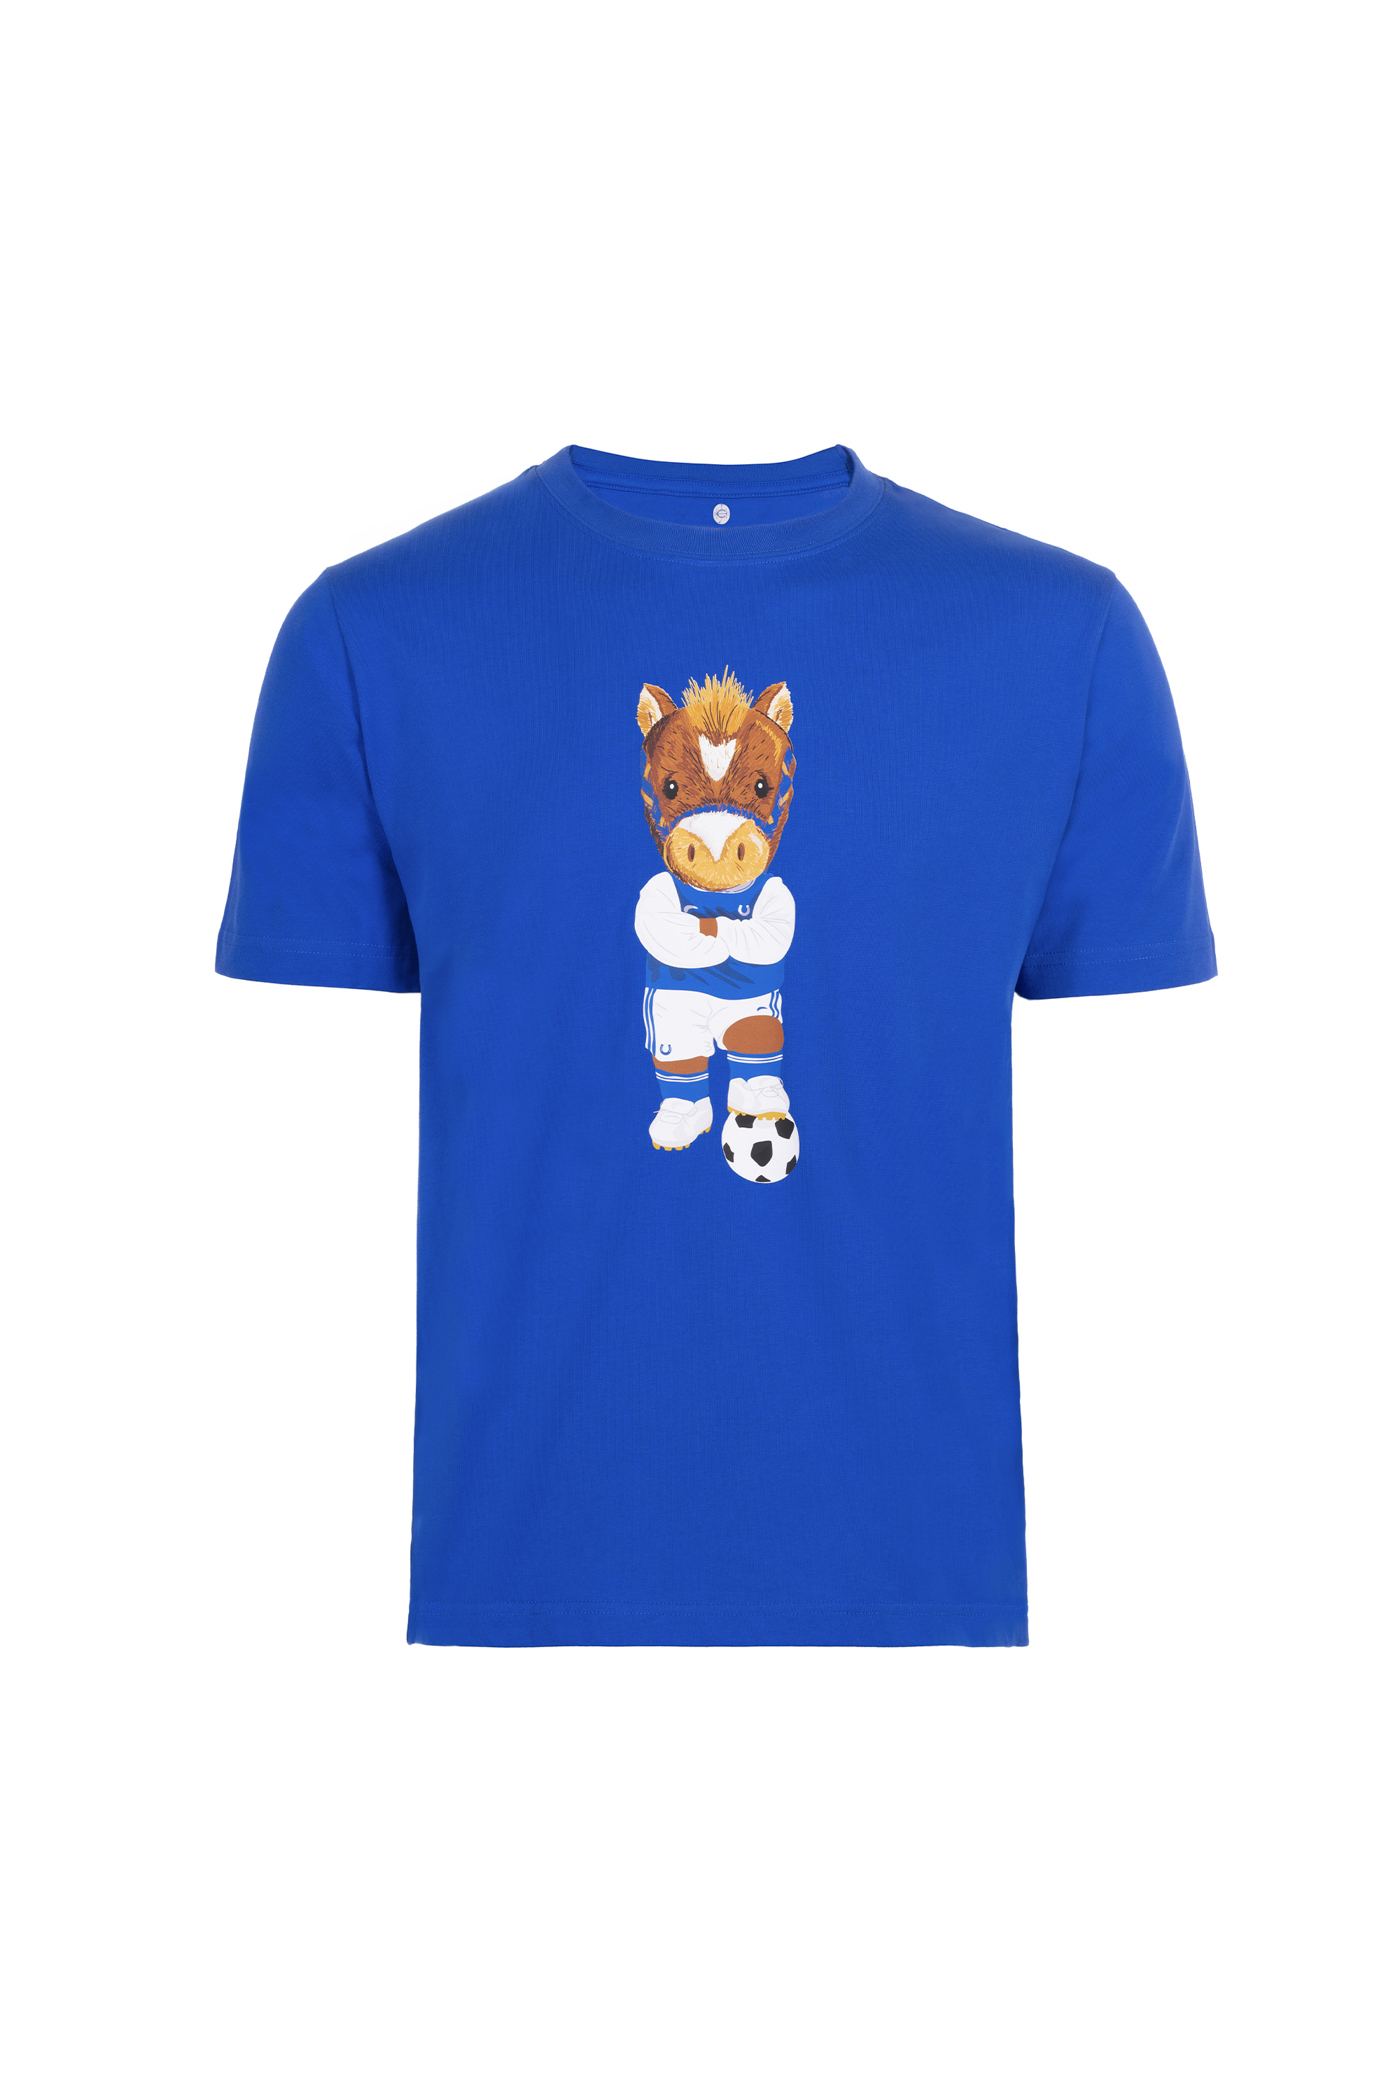 Printed Unisex Tee Shirt - Football